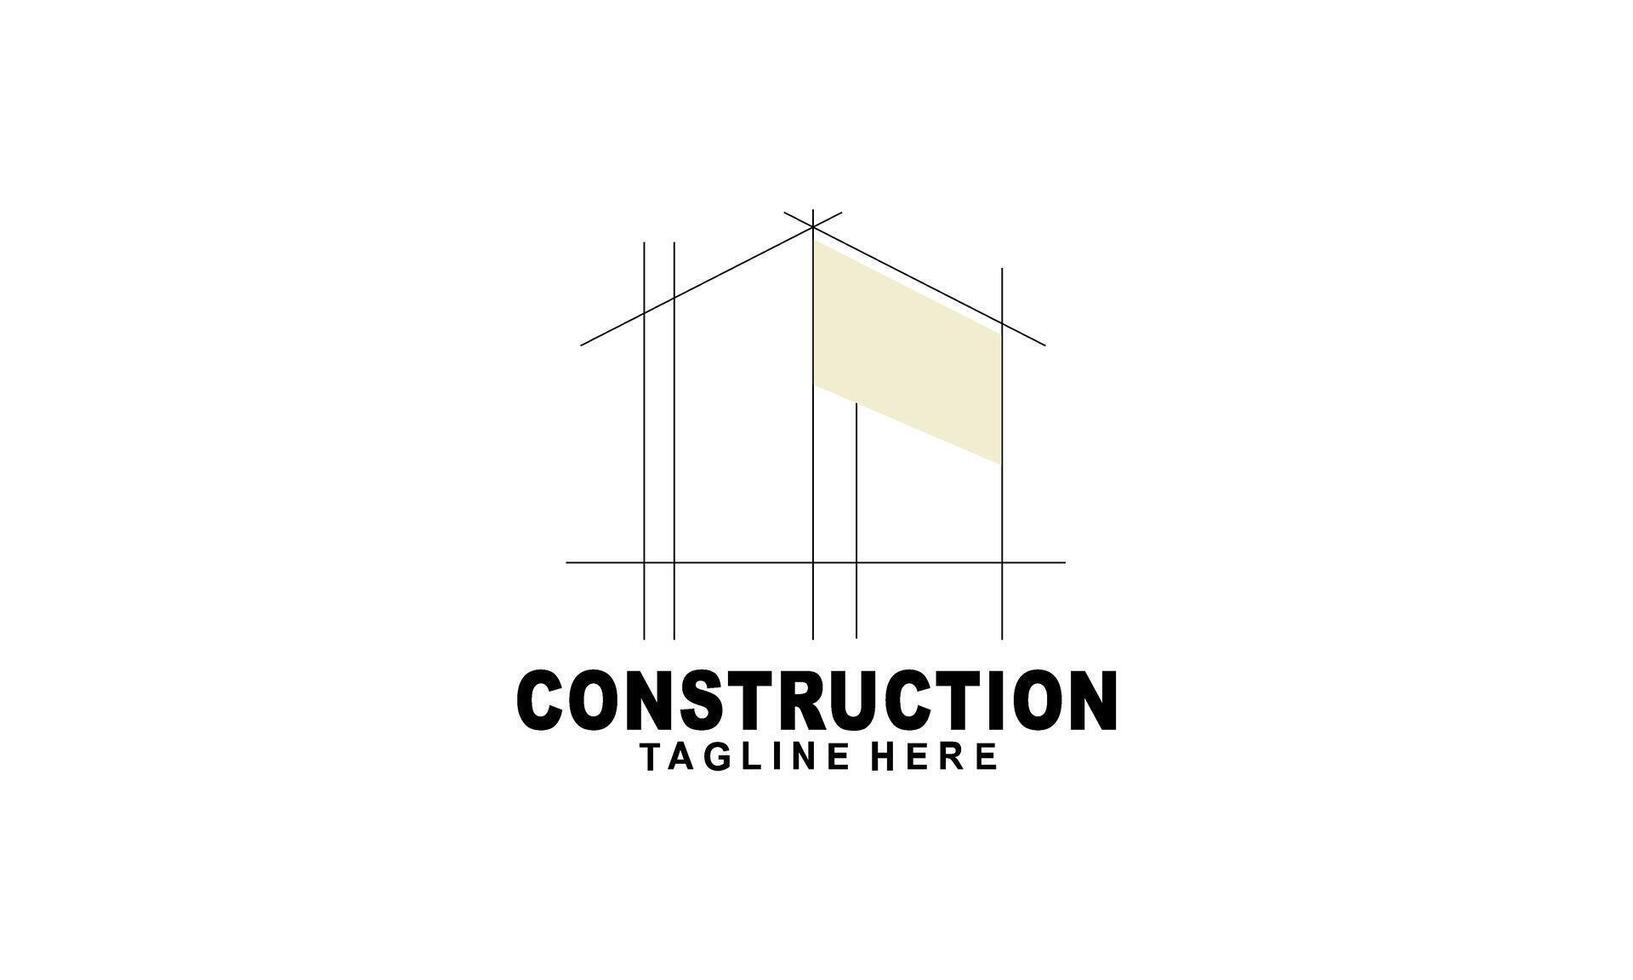 Home build illustration symbol logo design vector